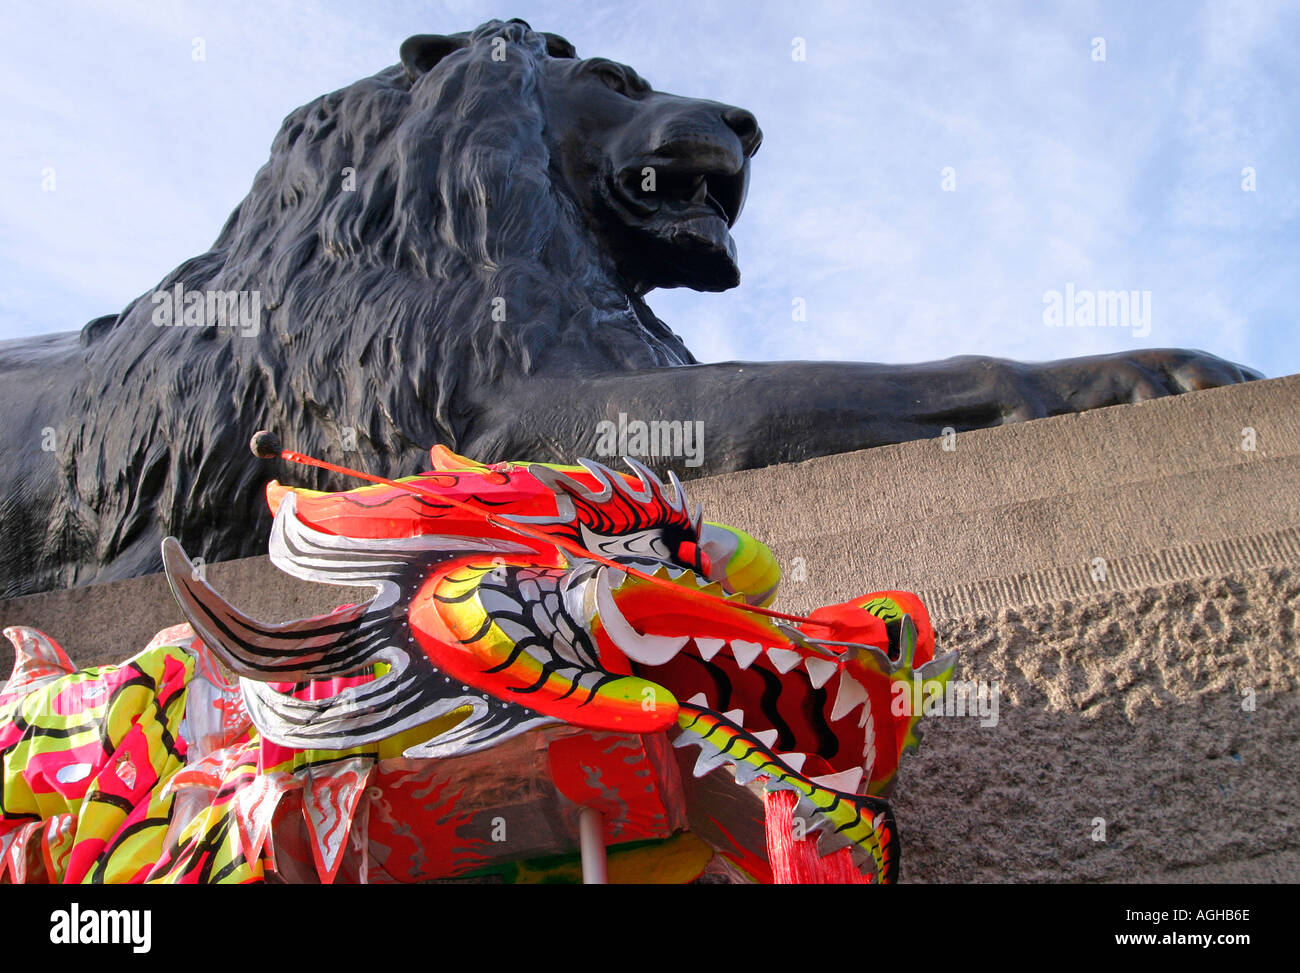 Landseer Lion statue and Dragon puppet. Trafalgar Square, London, England Stock Photo